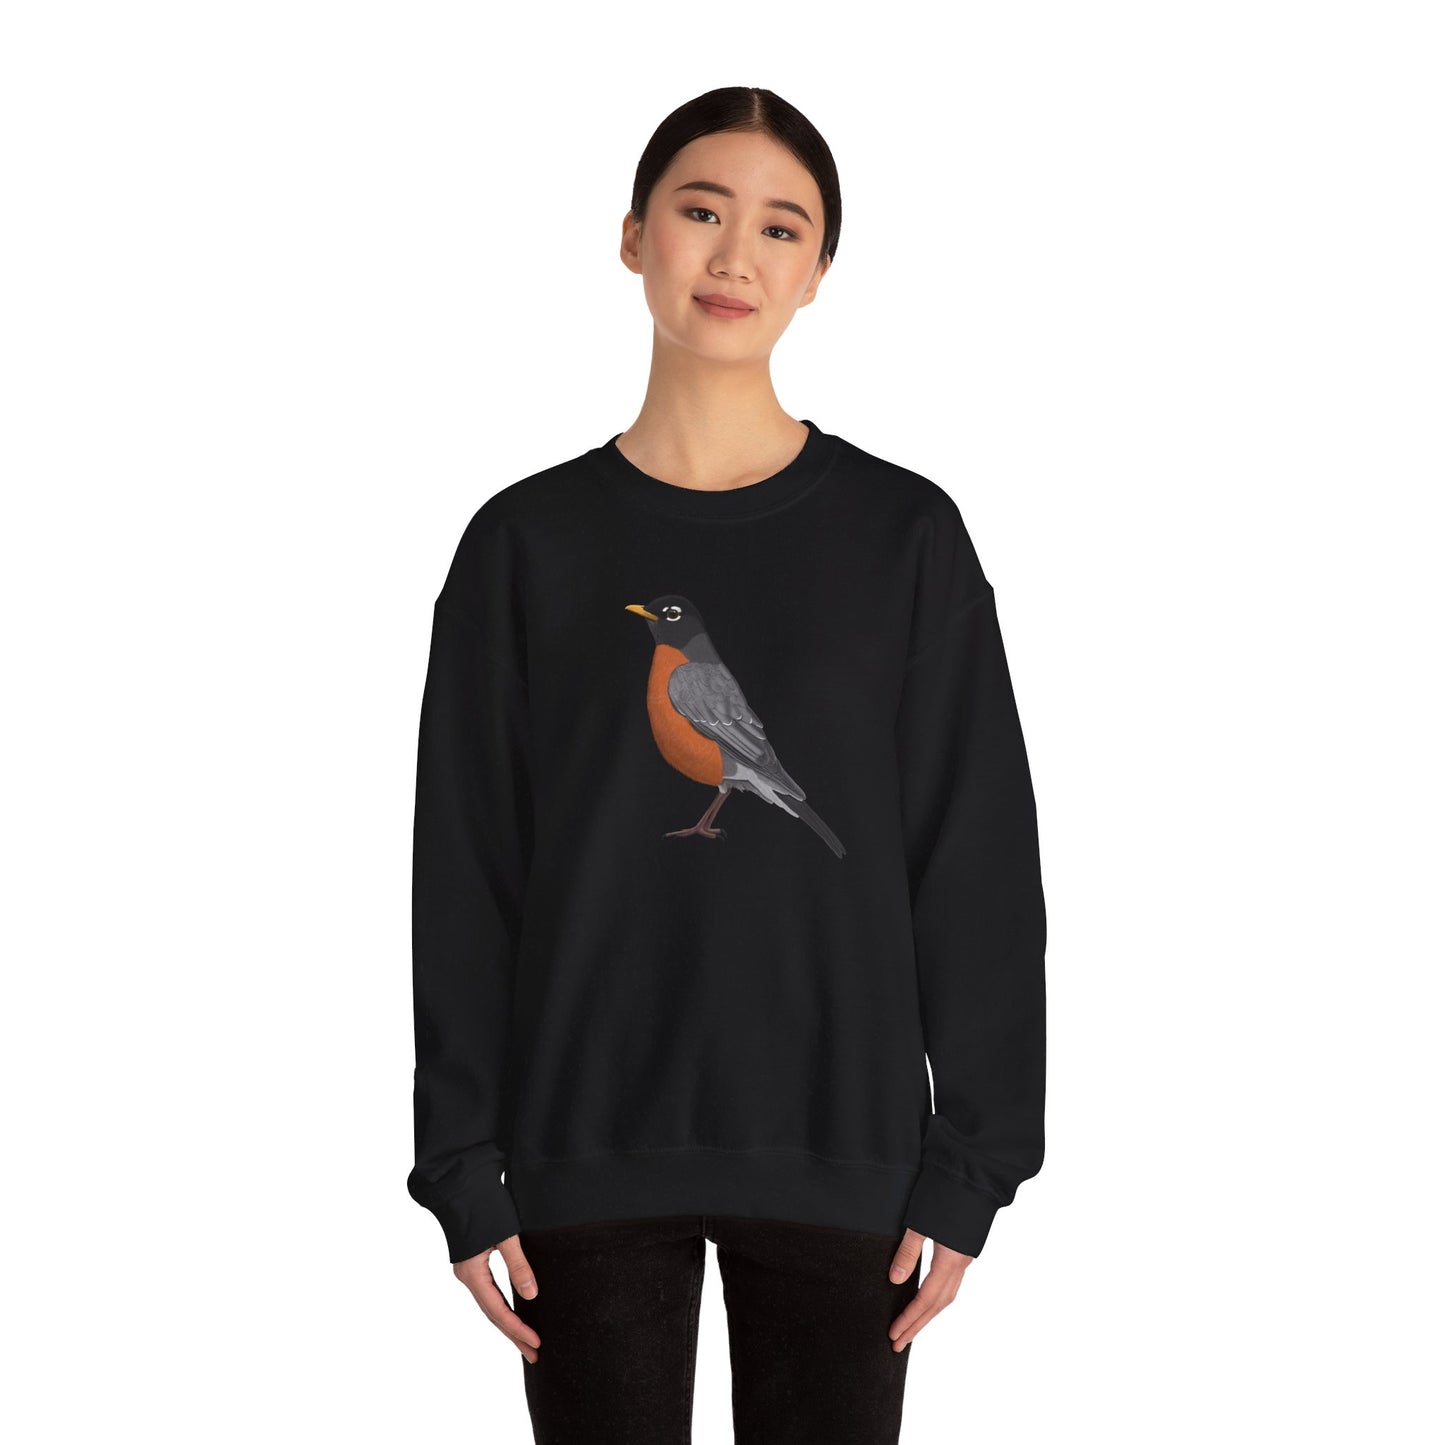 Robin Bird Watcher Biologist Crewneck Sweatshirt